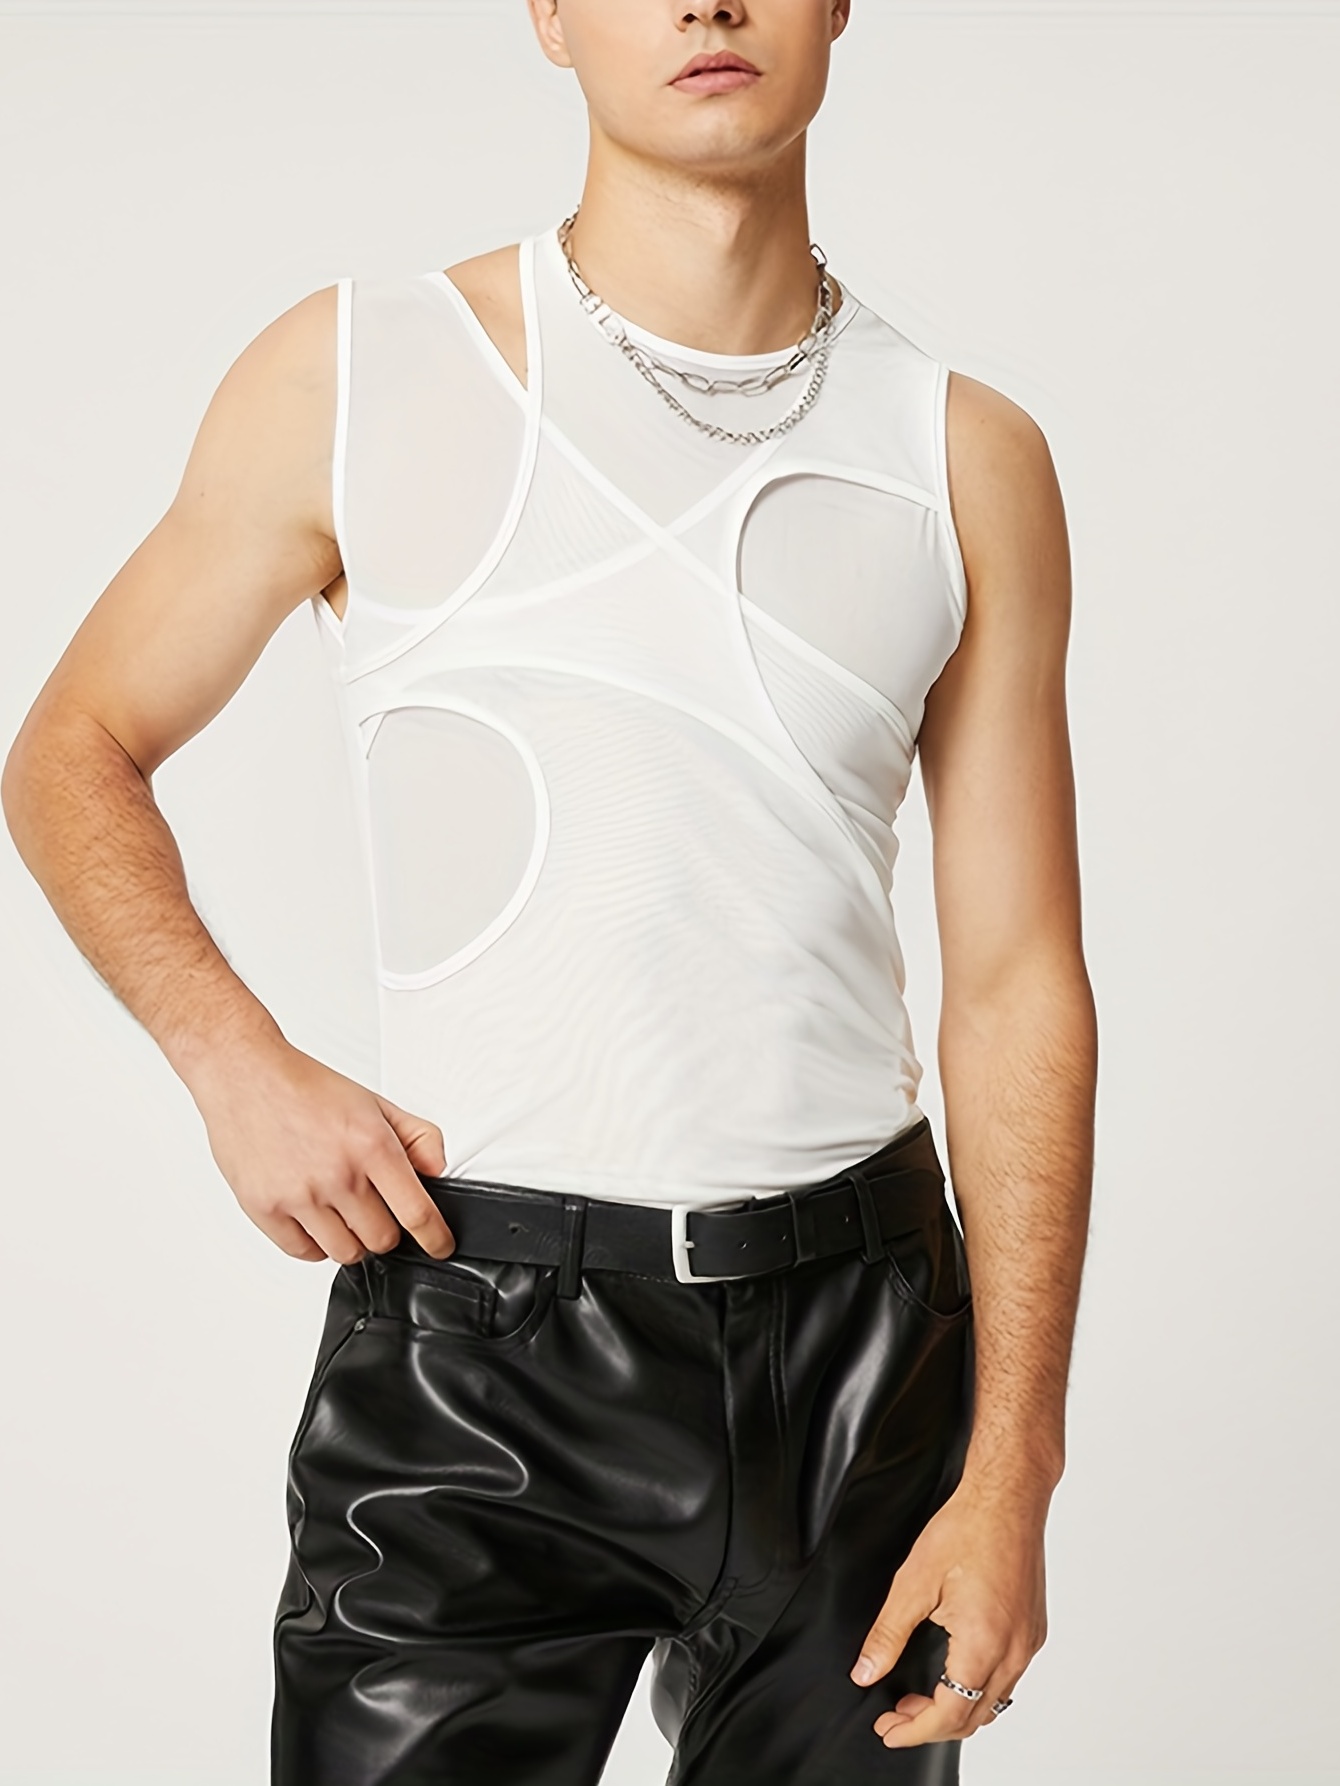 Sexy Men Mesh Fishnet See Through Undershirt Sports Muscle Shirt Tank Top  Vests